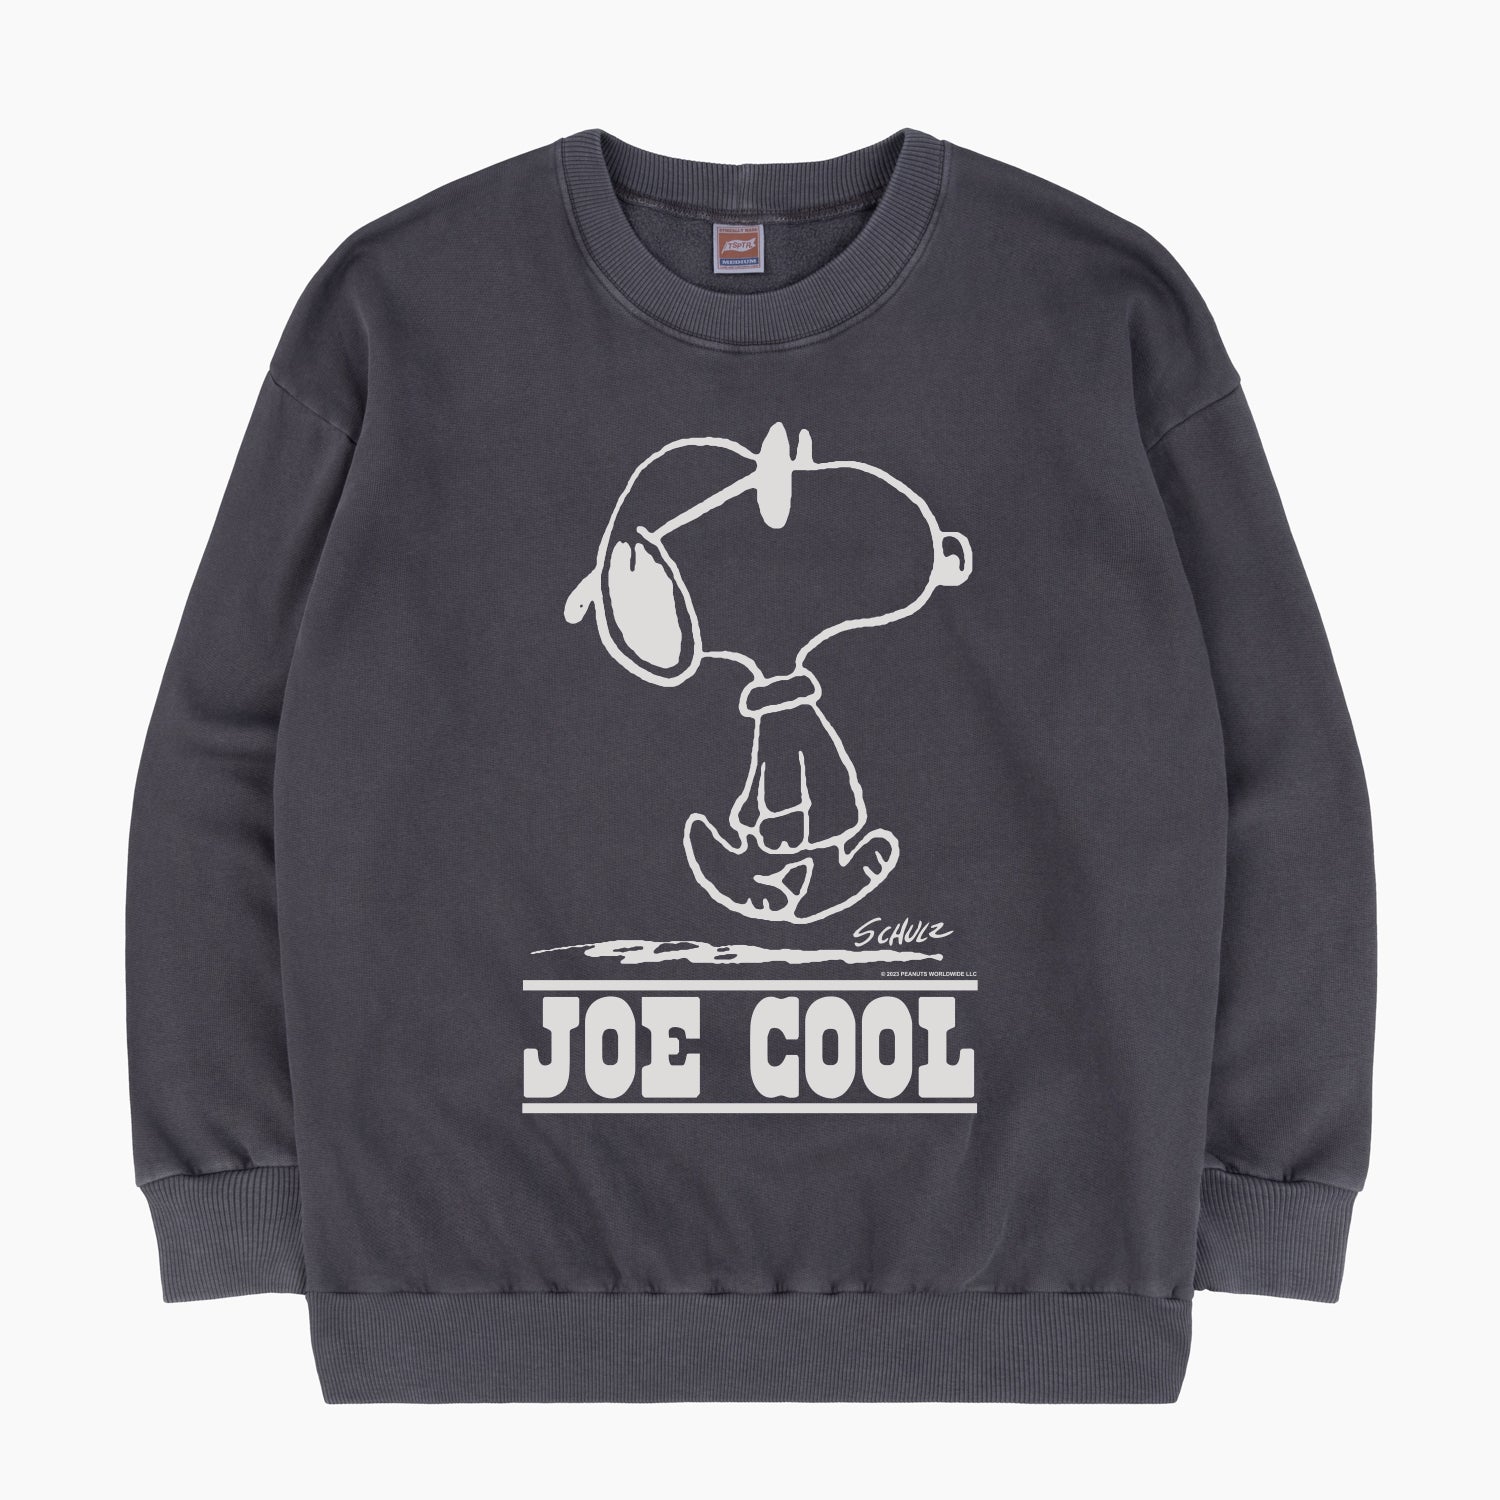 JOE COOL 60s Sweatshirt